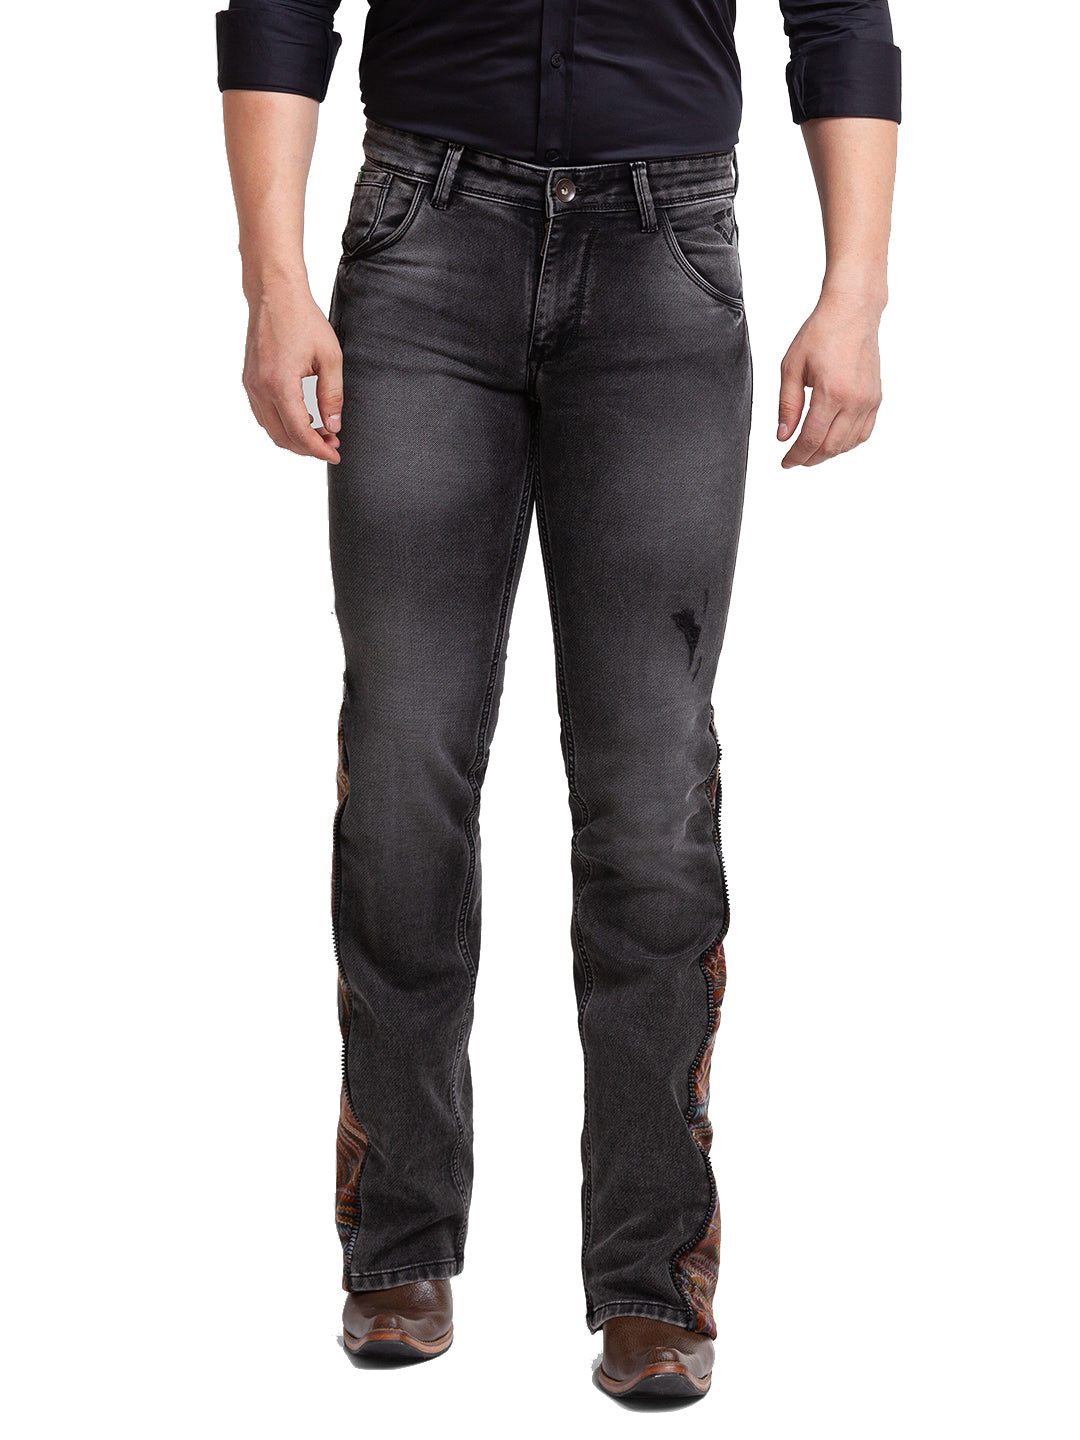 Carbon Black Zipper Bottom Bootcut Jeans